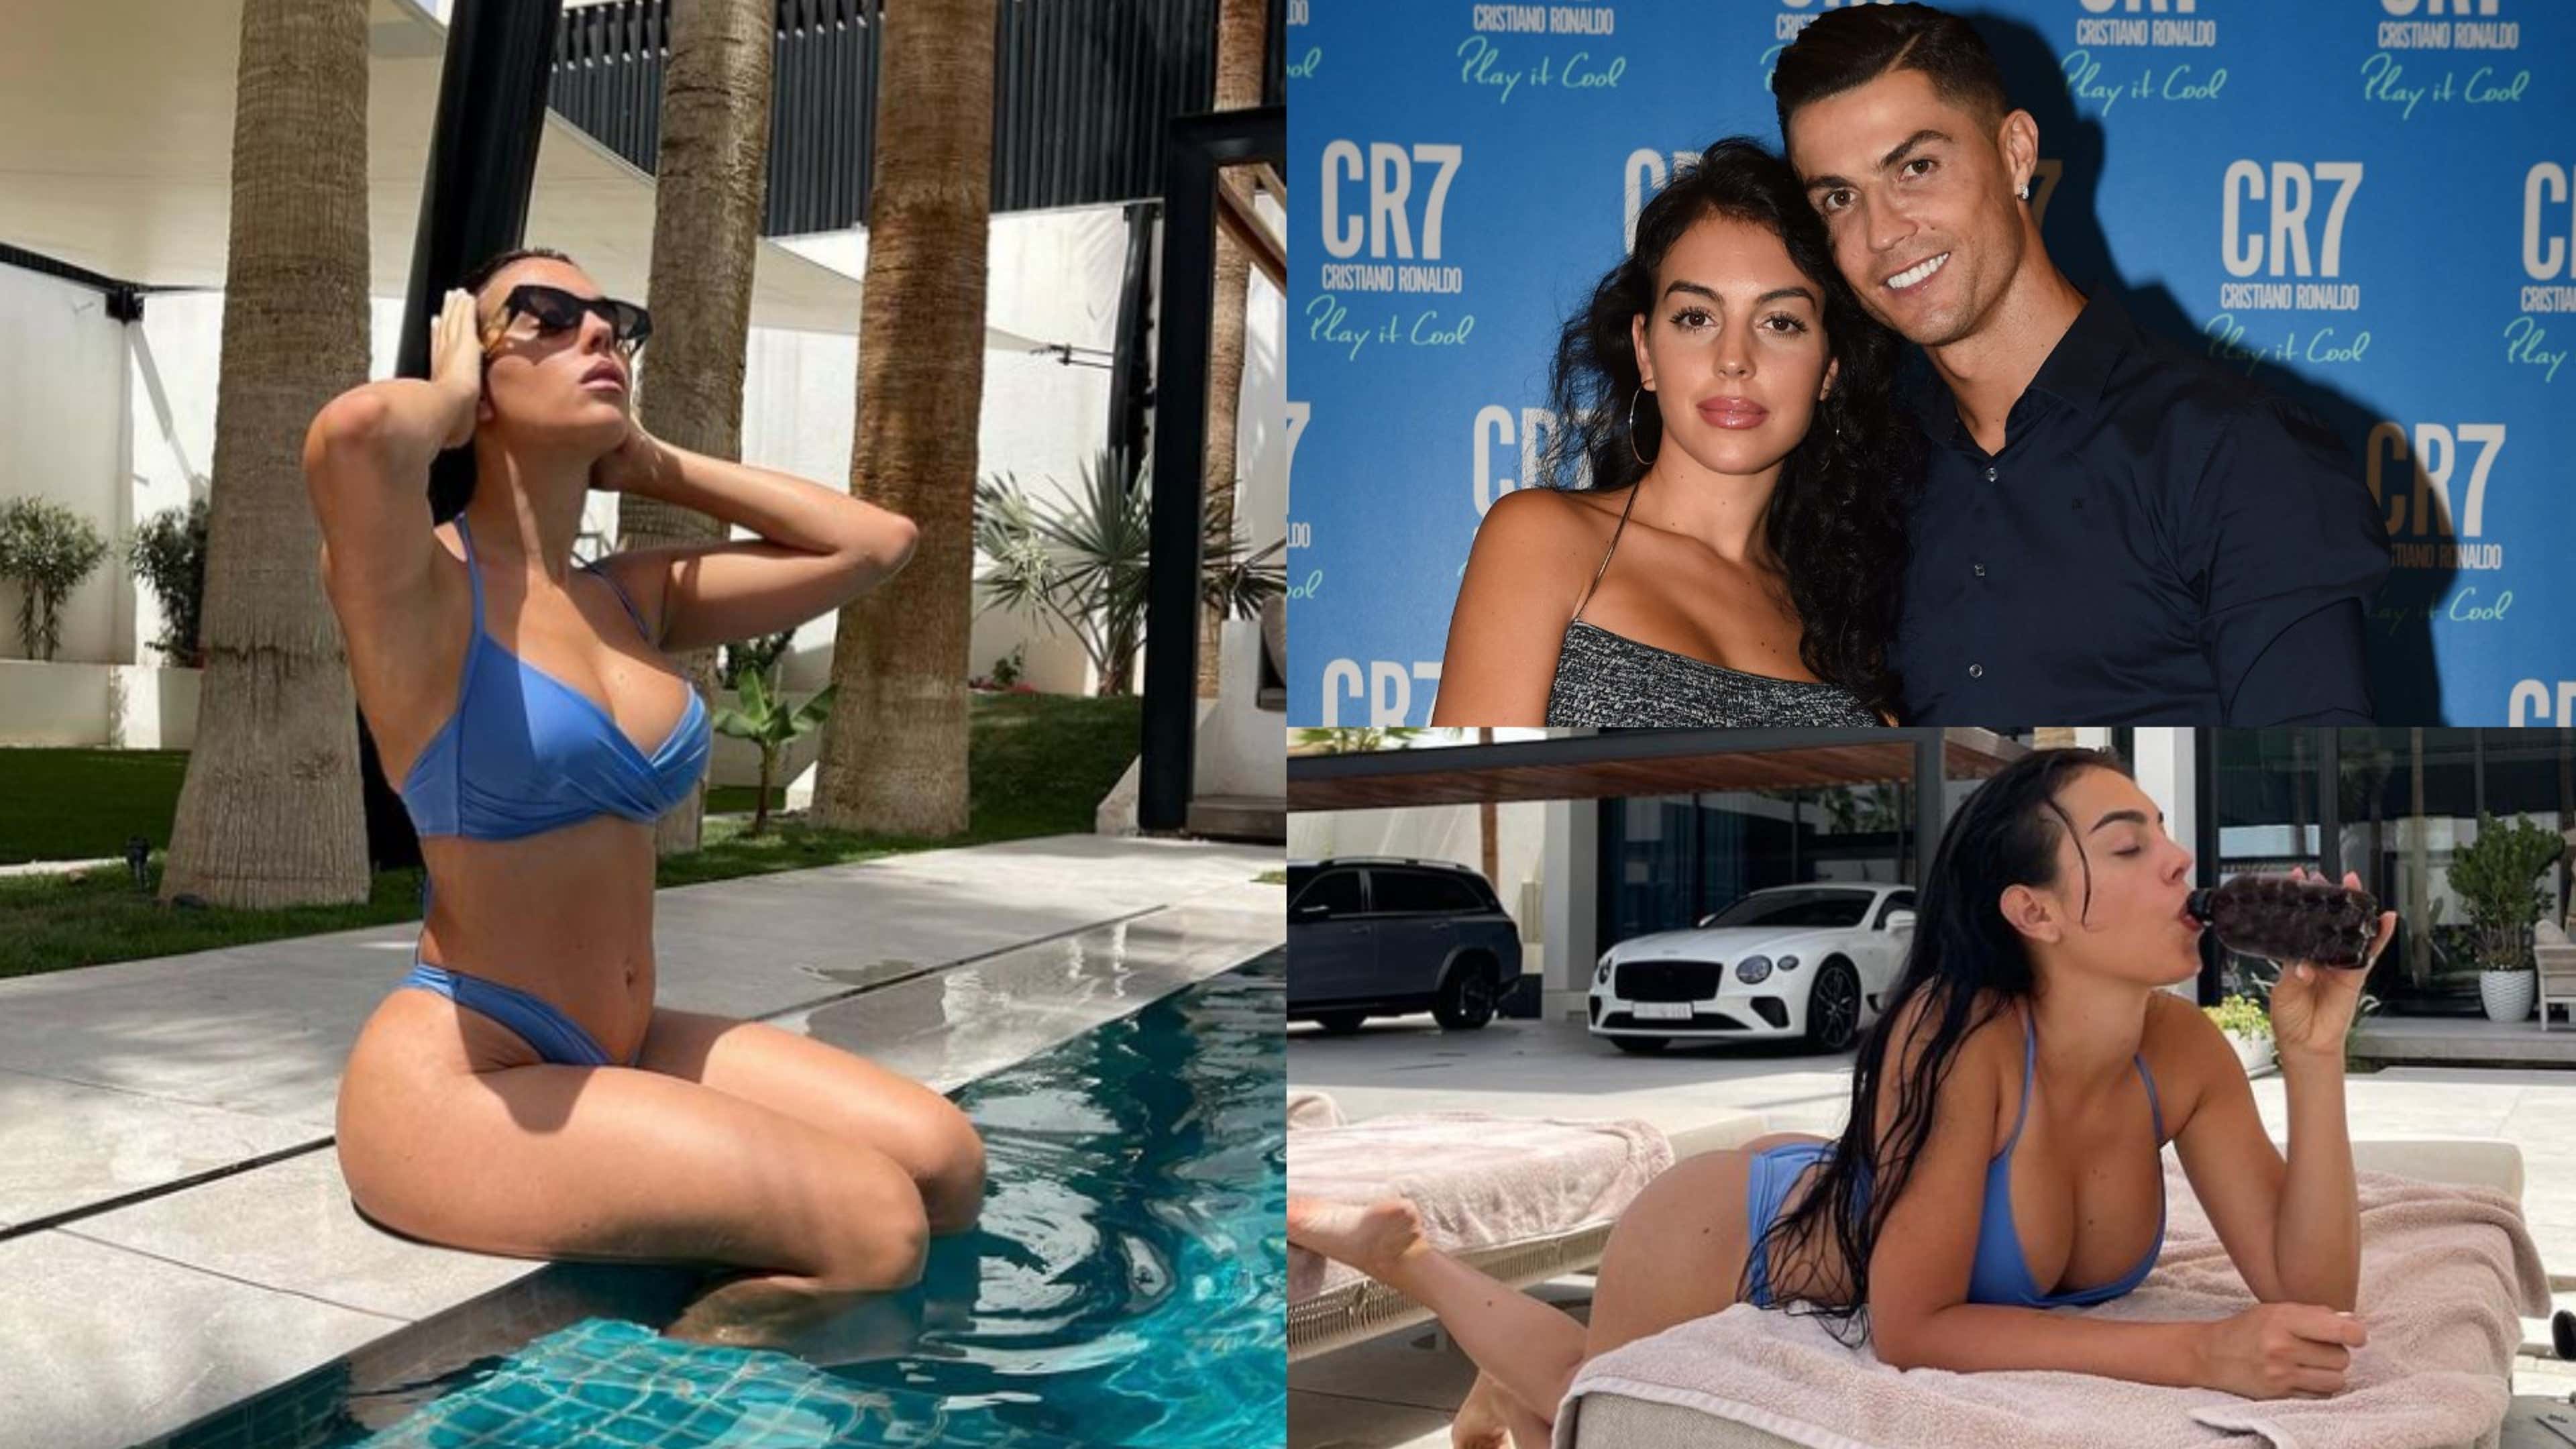 Hot Livo Nude - Cristiano Ronaldo's girlfriend Georgina Rodriguez posts racy bikini  pictures on Instagram as she risks breaking strict Saudi Arabian law |  Goal.com UK